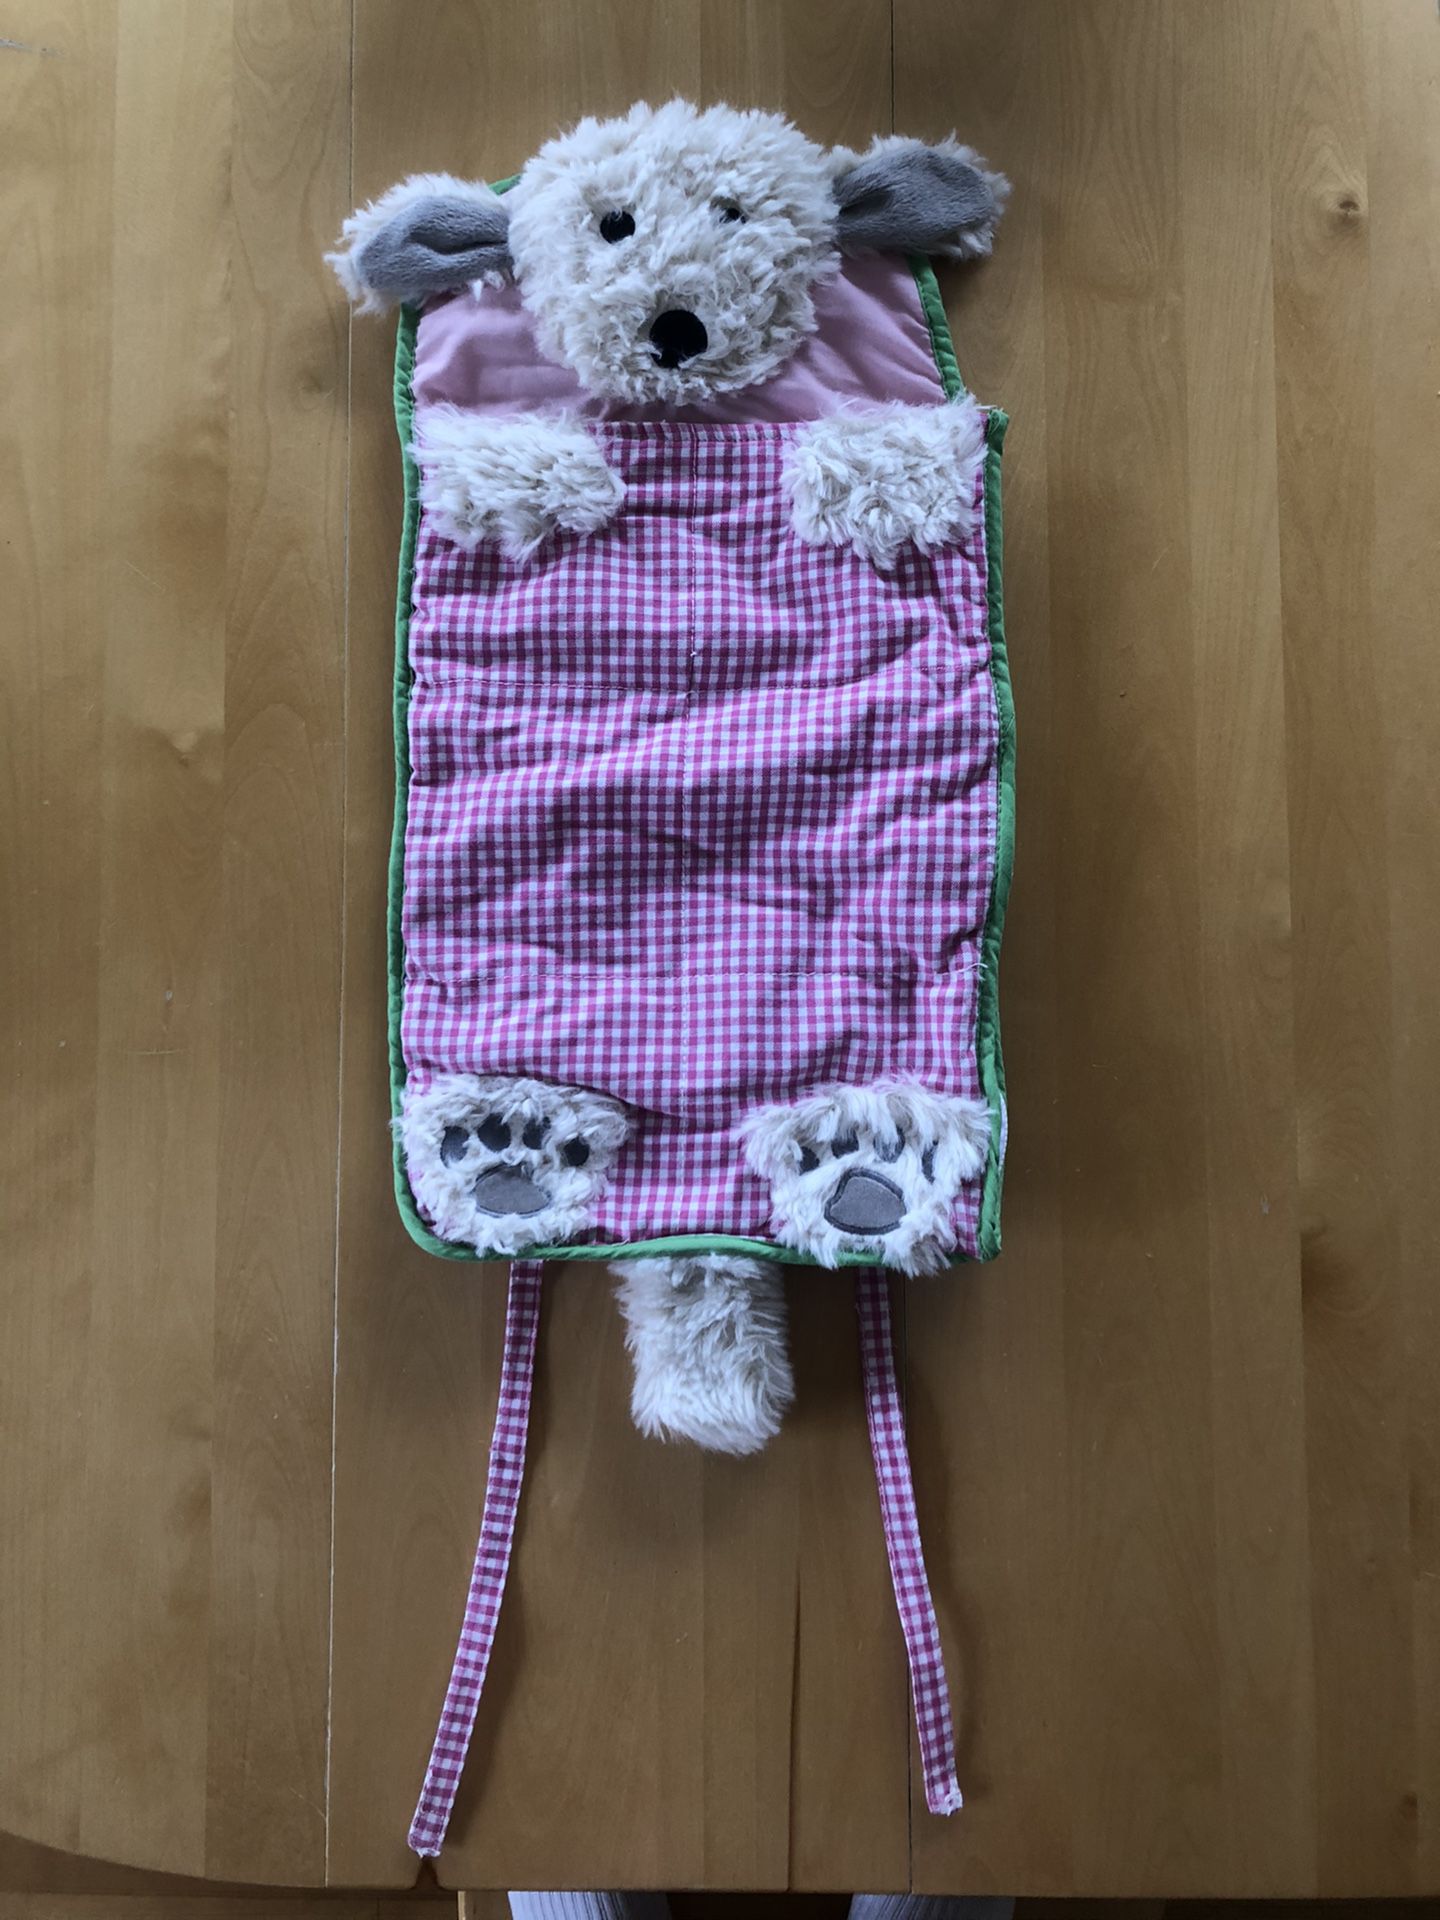 American Girl Sleeping Bag made by Pottery Barn Kids for 18” Dolls